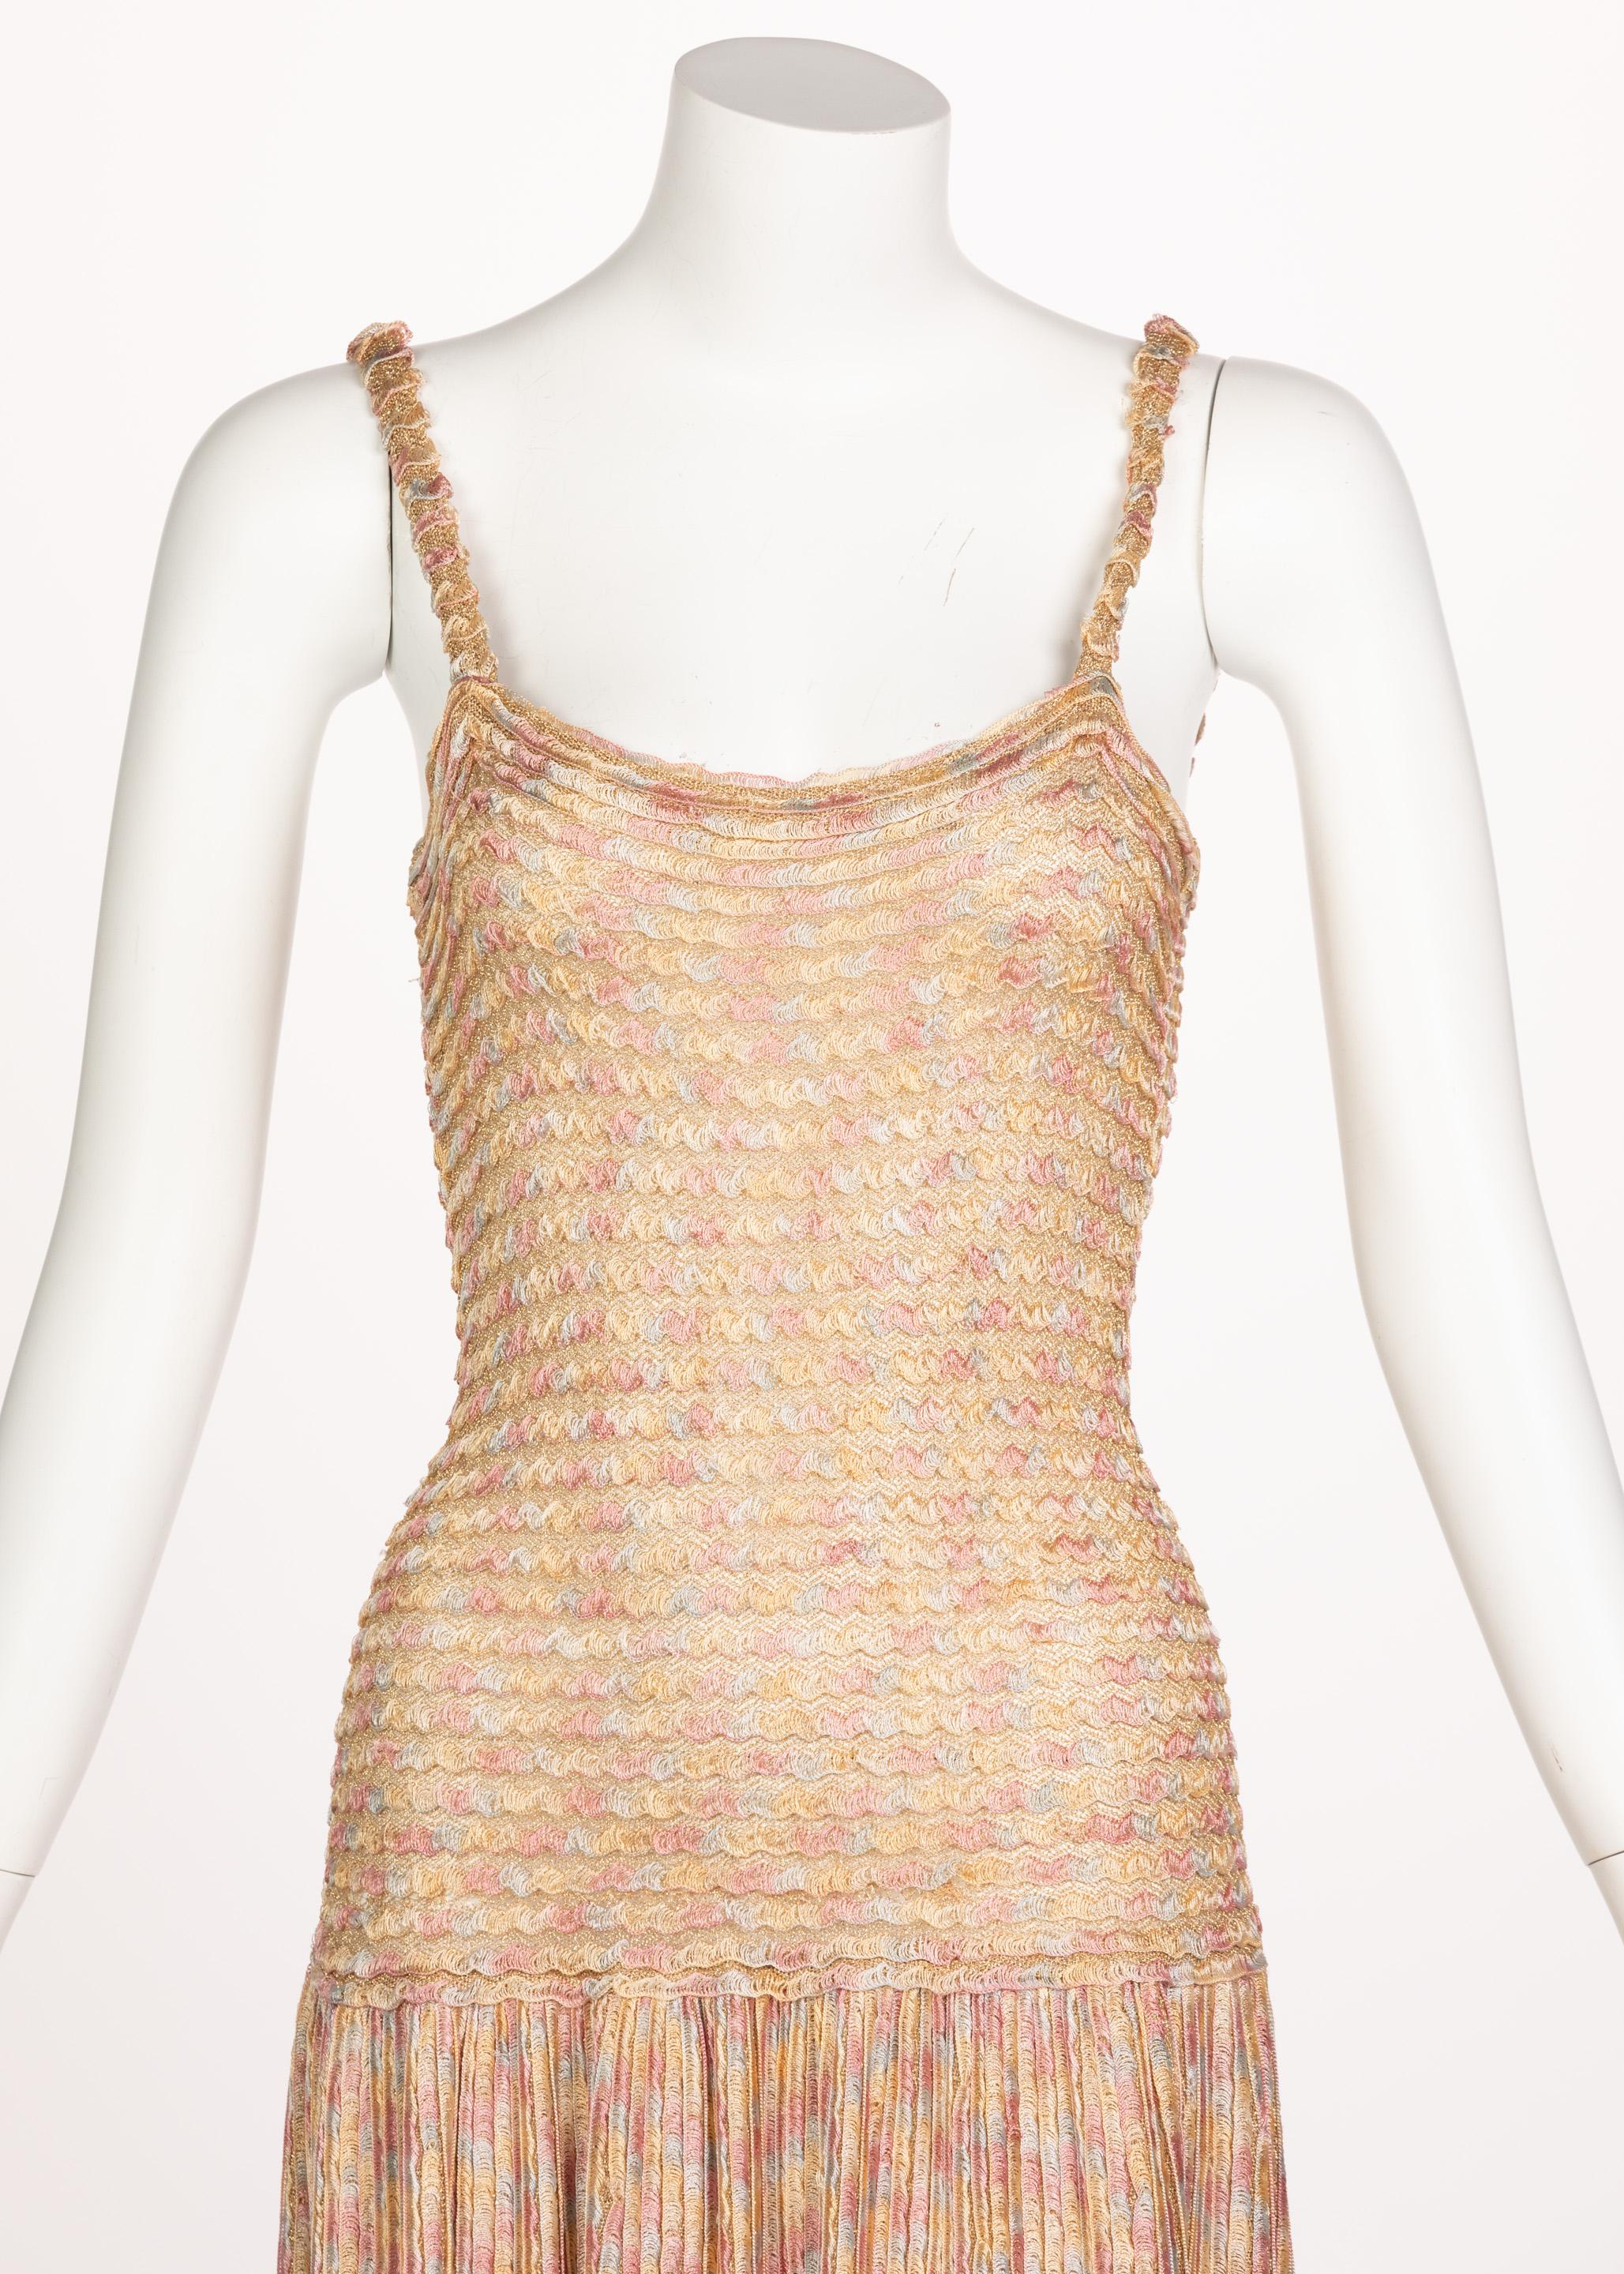 Missoni Pink Gold Knit Maxi Dress Cardigan Necklace Beret Set, 1970s For Sale 7